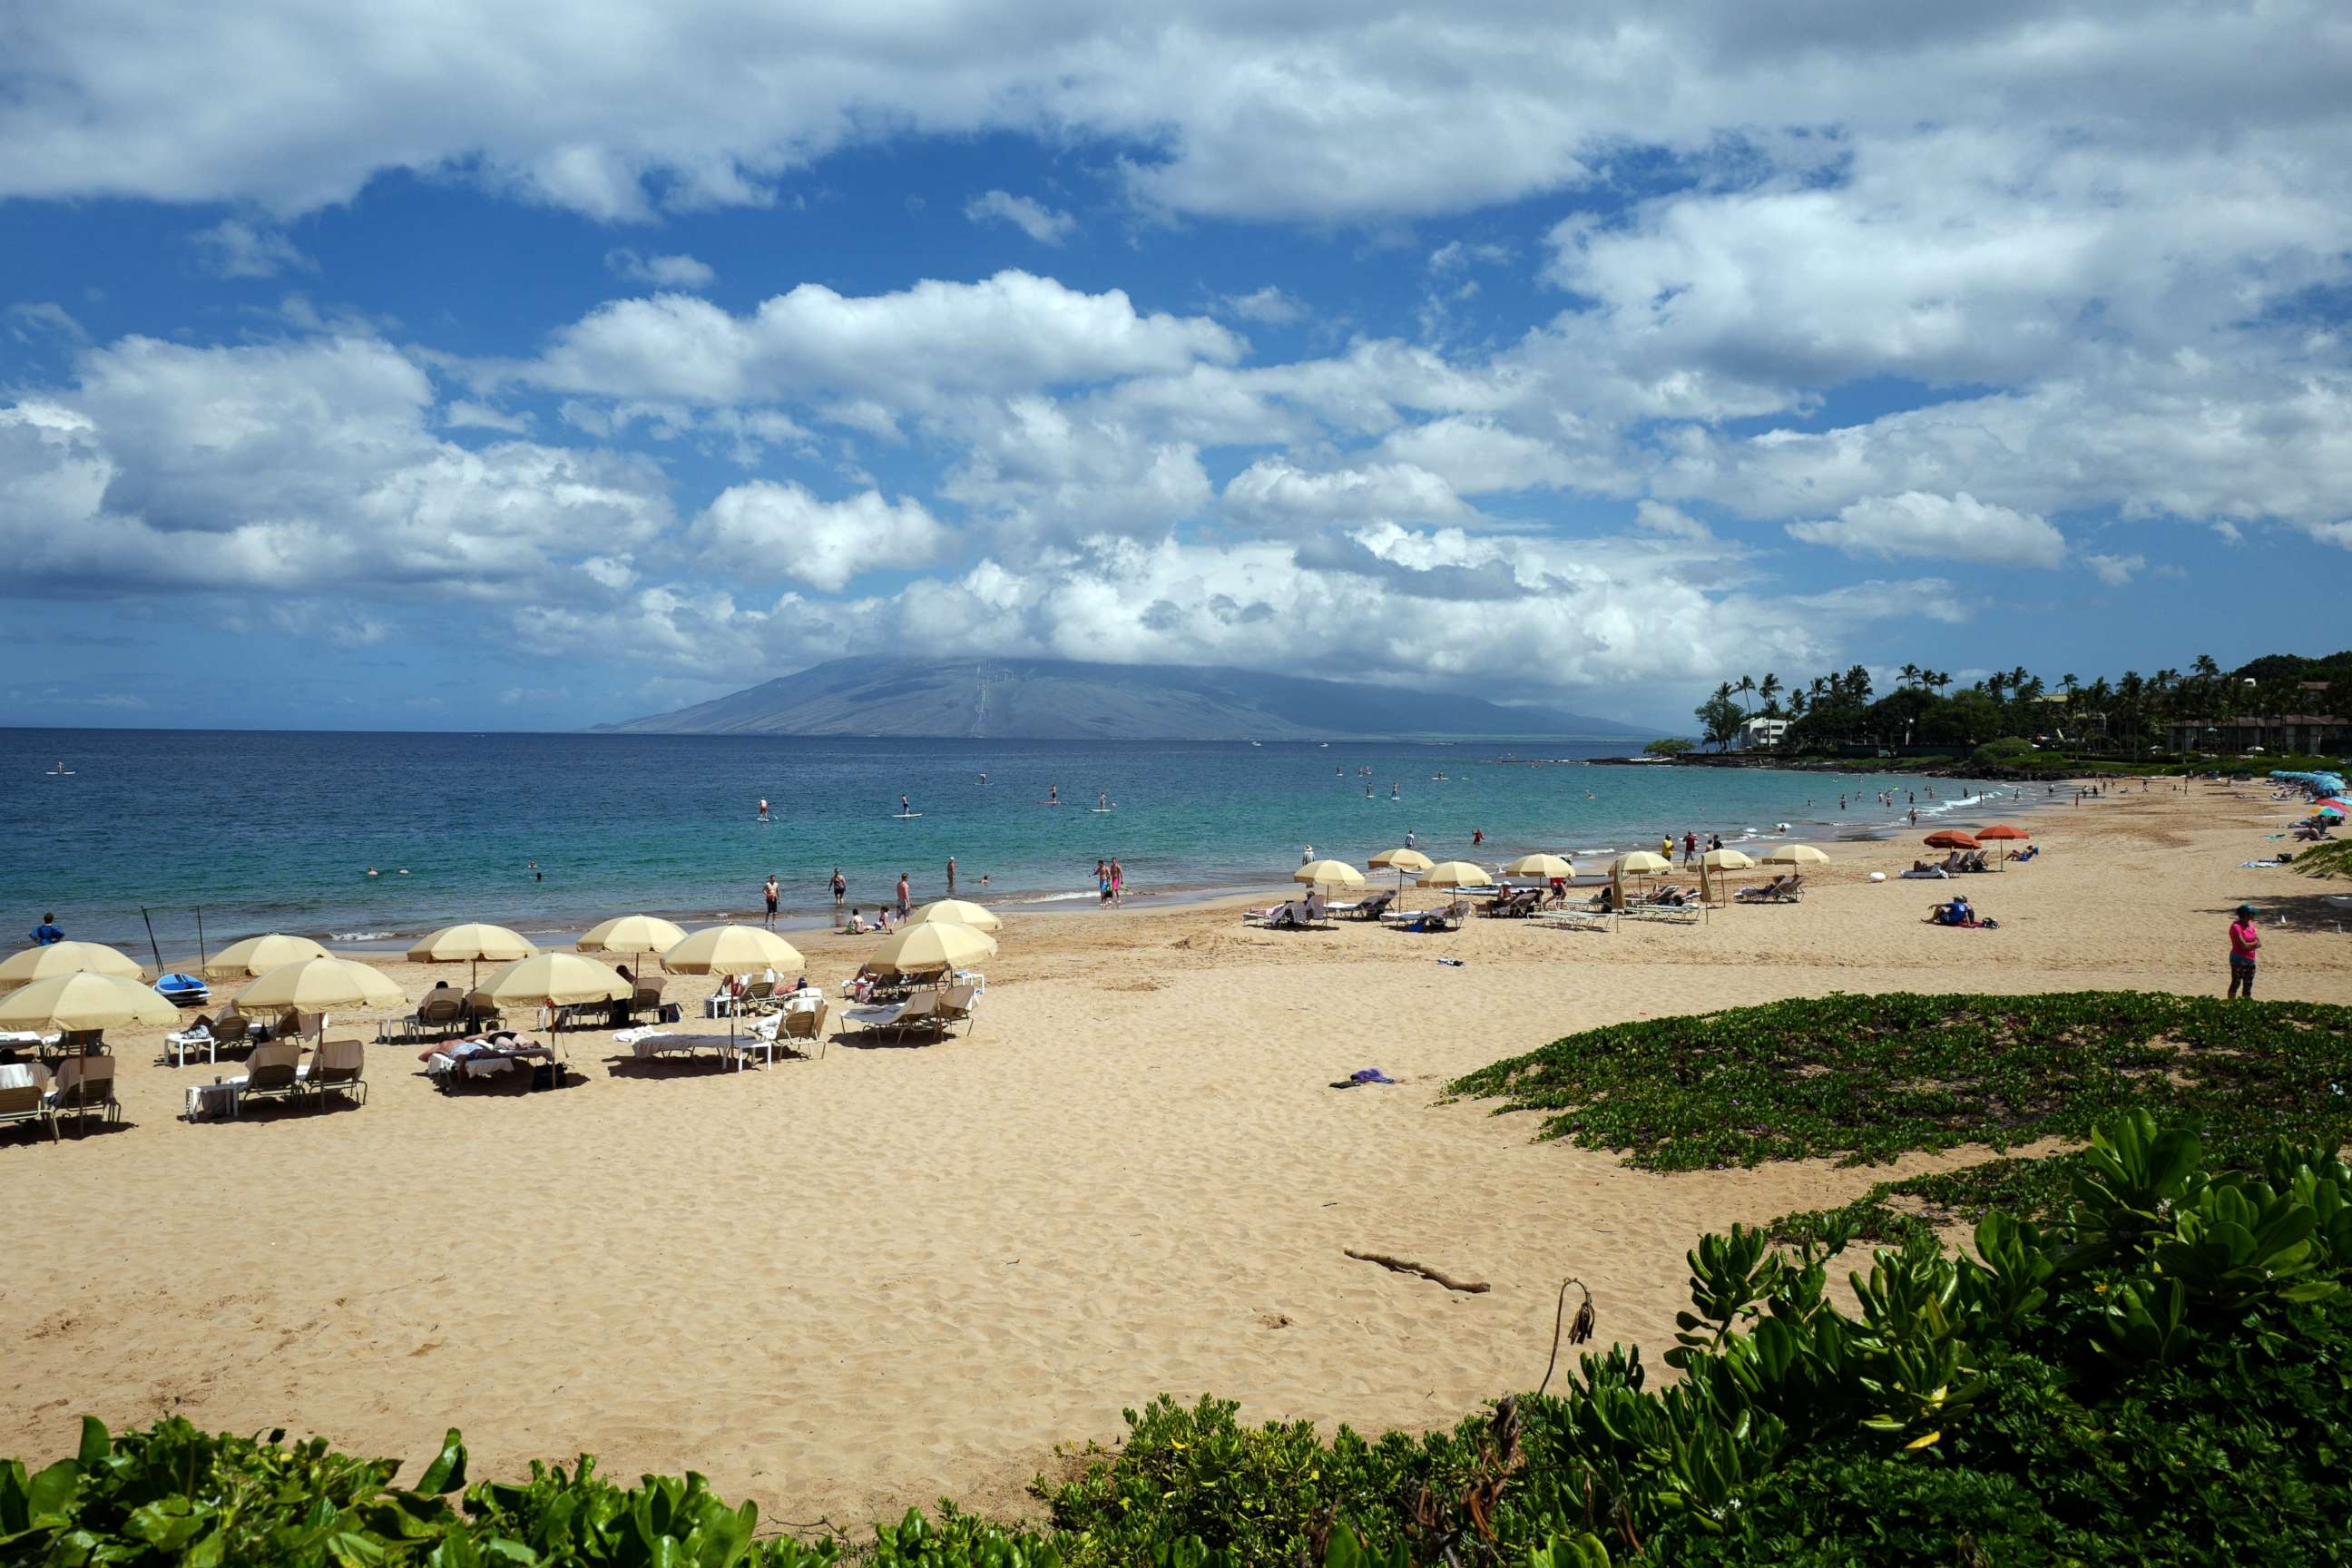 Nine people have drowned near Maui, Hawaii, since Jan. 14.